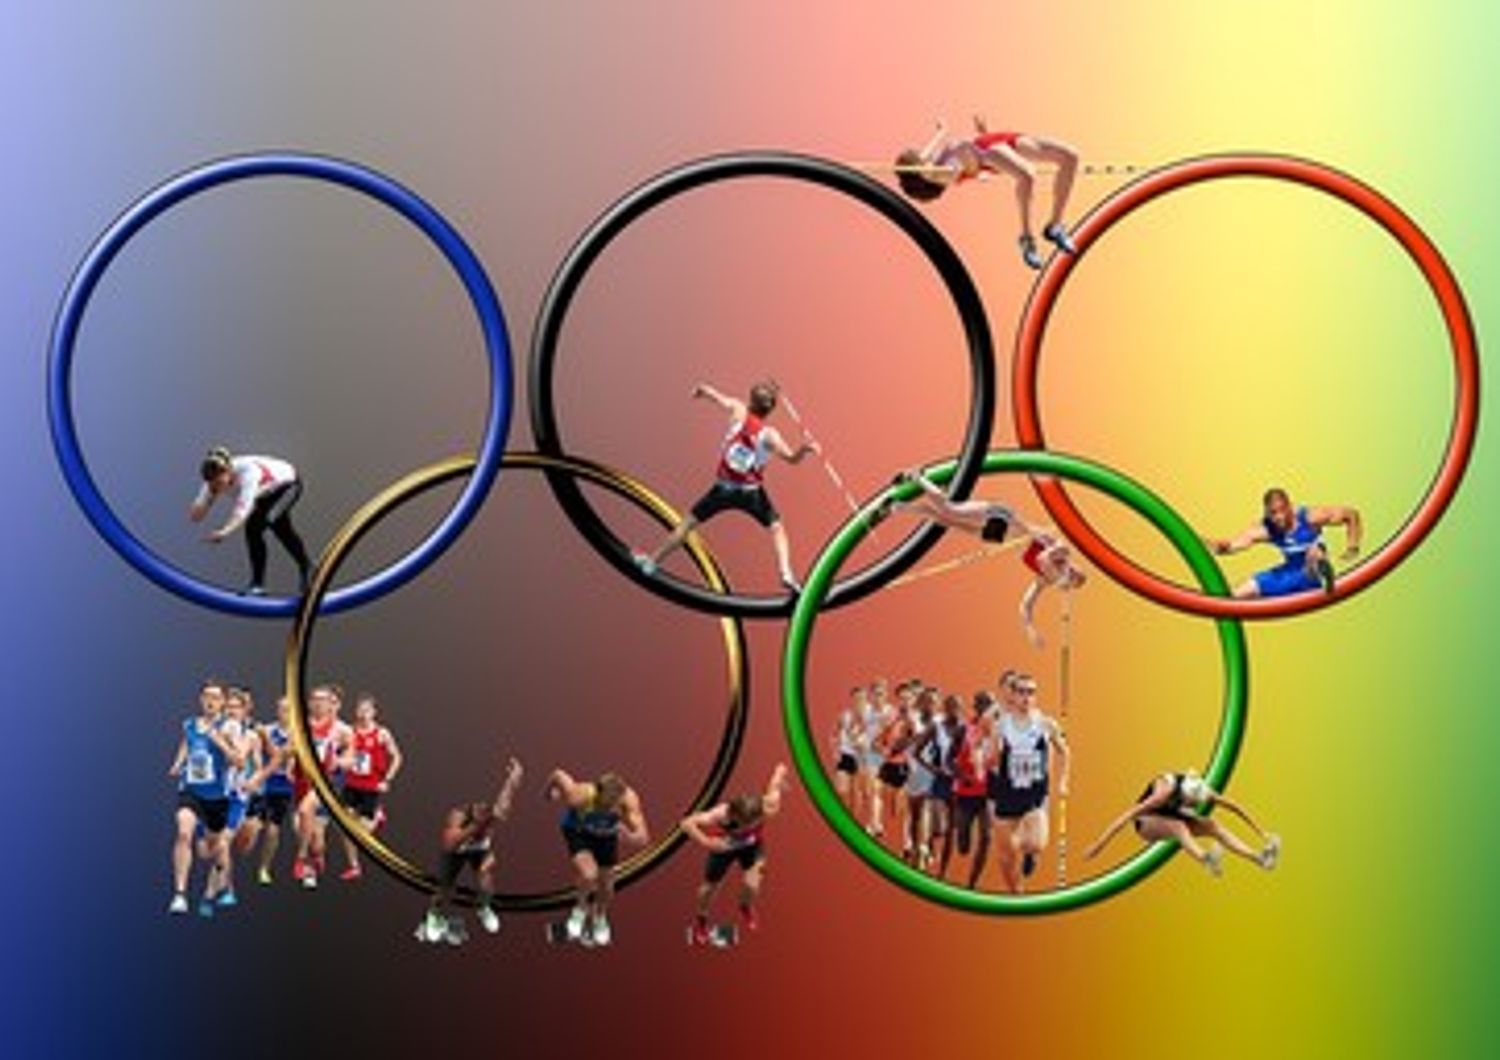 &nbsp; Olimpiadi giochi olimpici Rio 2016 - pixabay